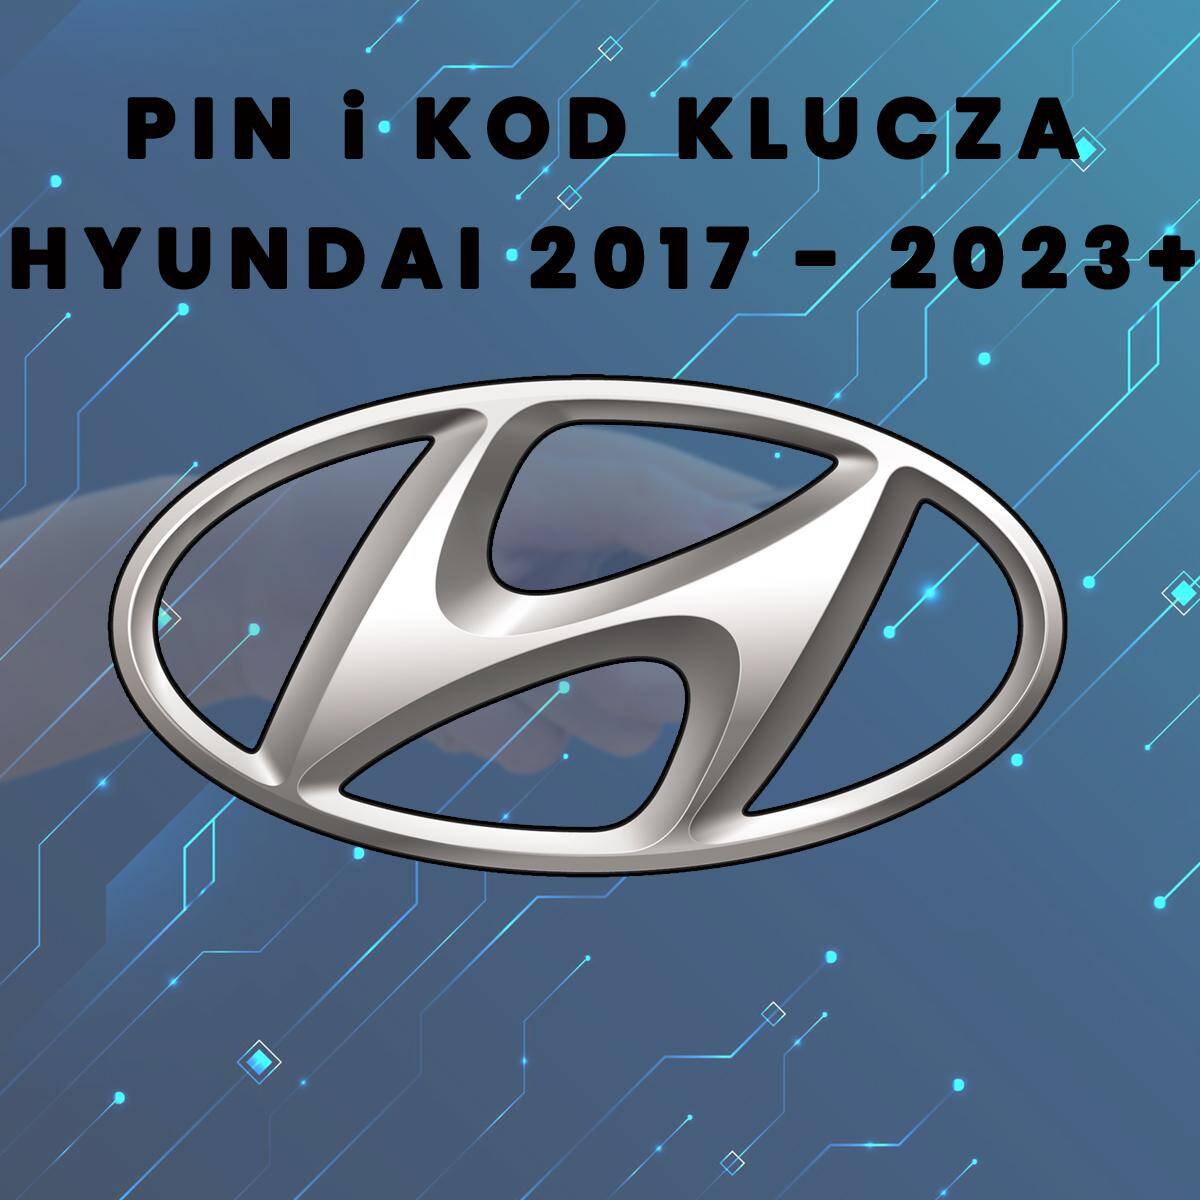 Pin i kod klucza Hyundai rocznik 2017 - 2023+